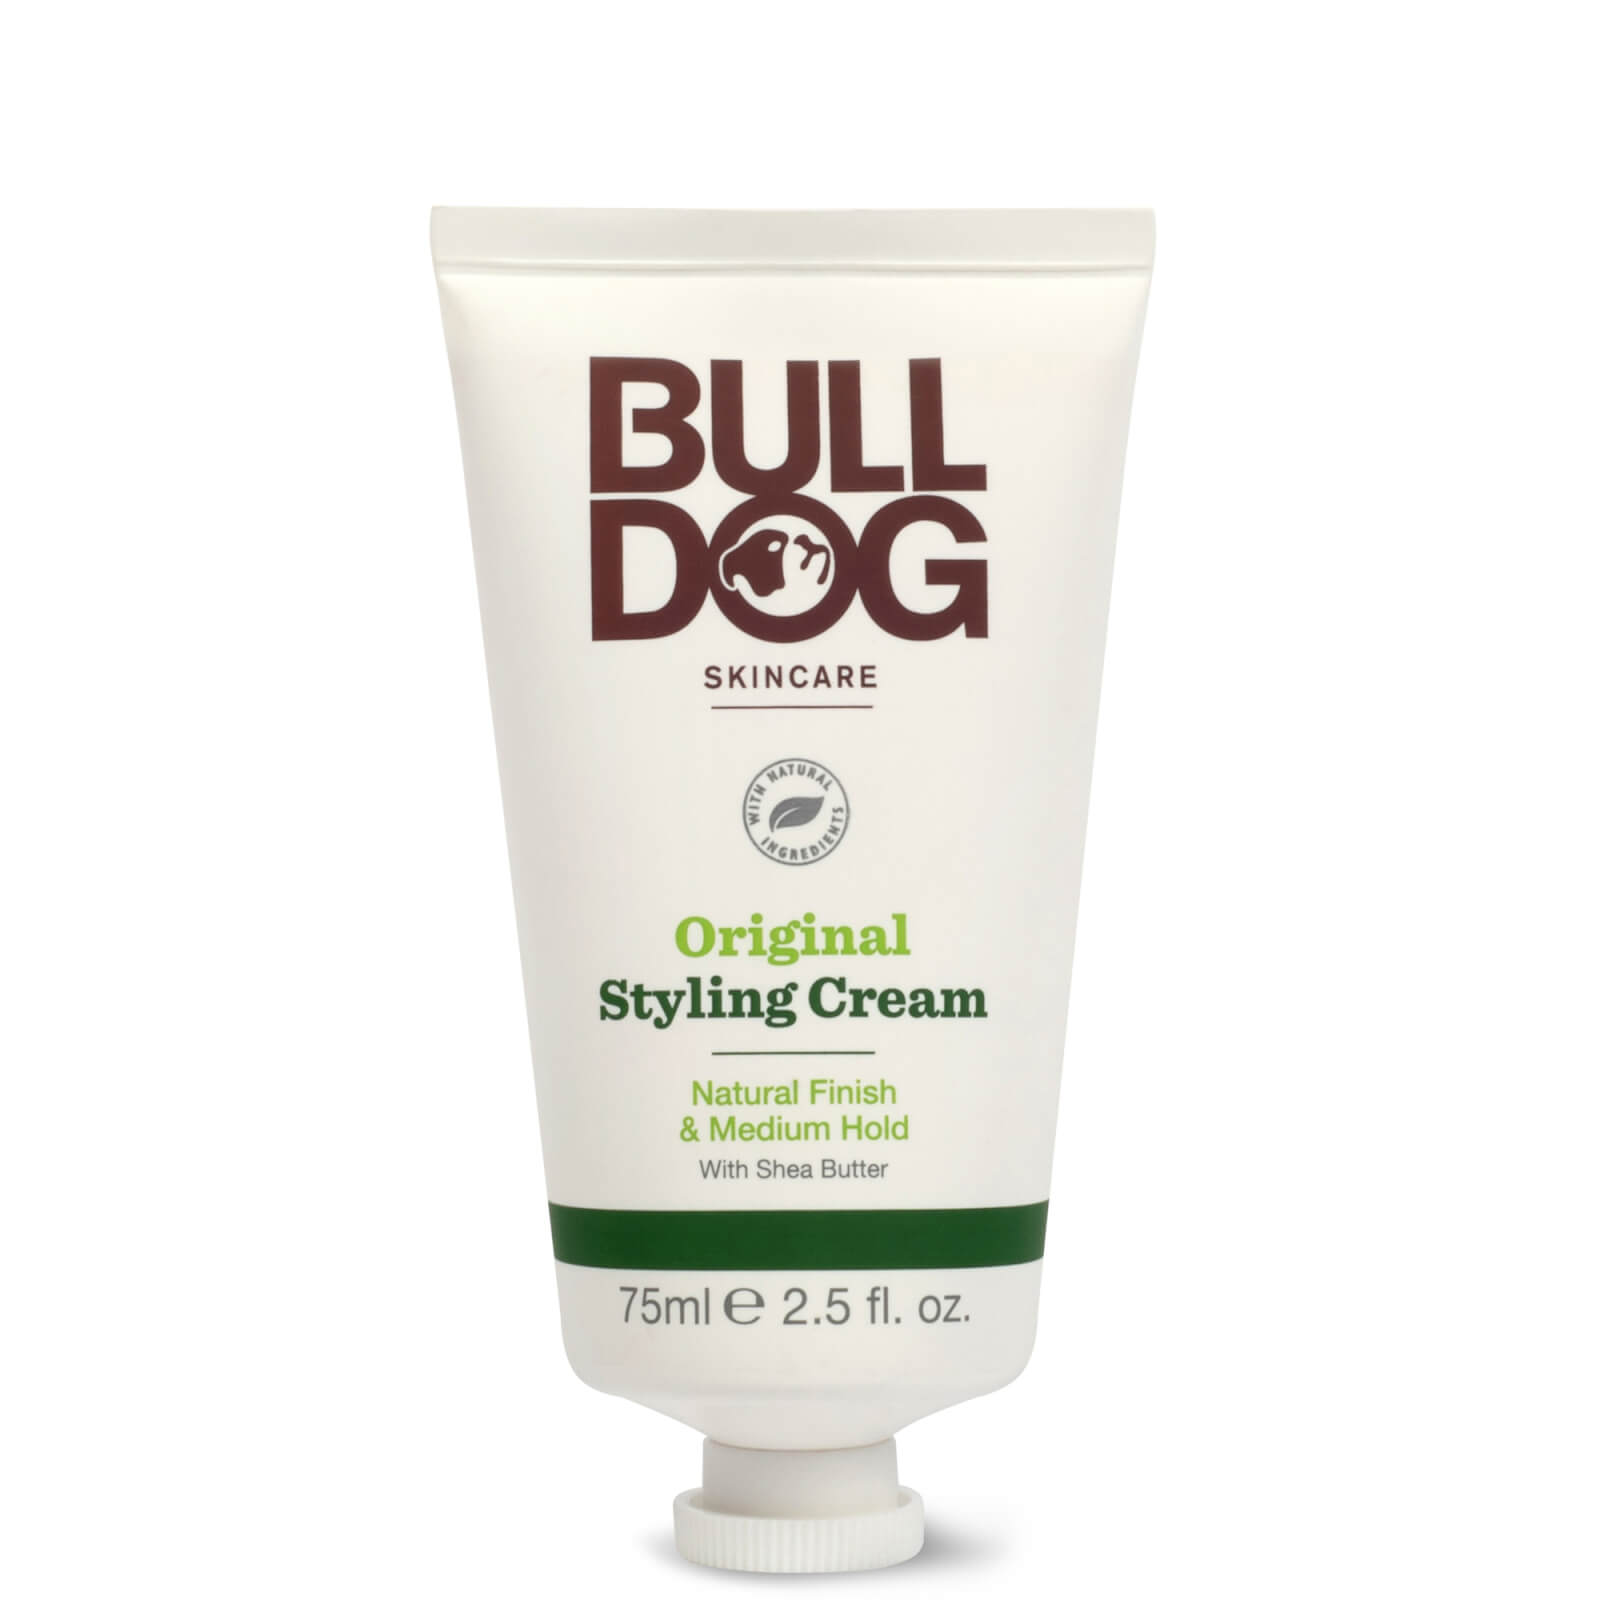 Image of Bulldog Skincare for Men Original Styling Cream 75ml